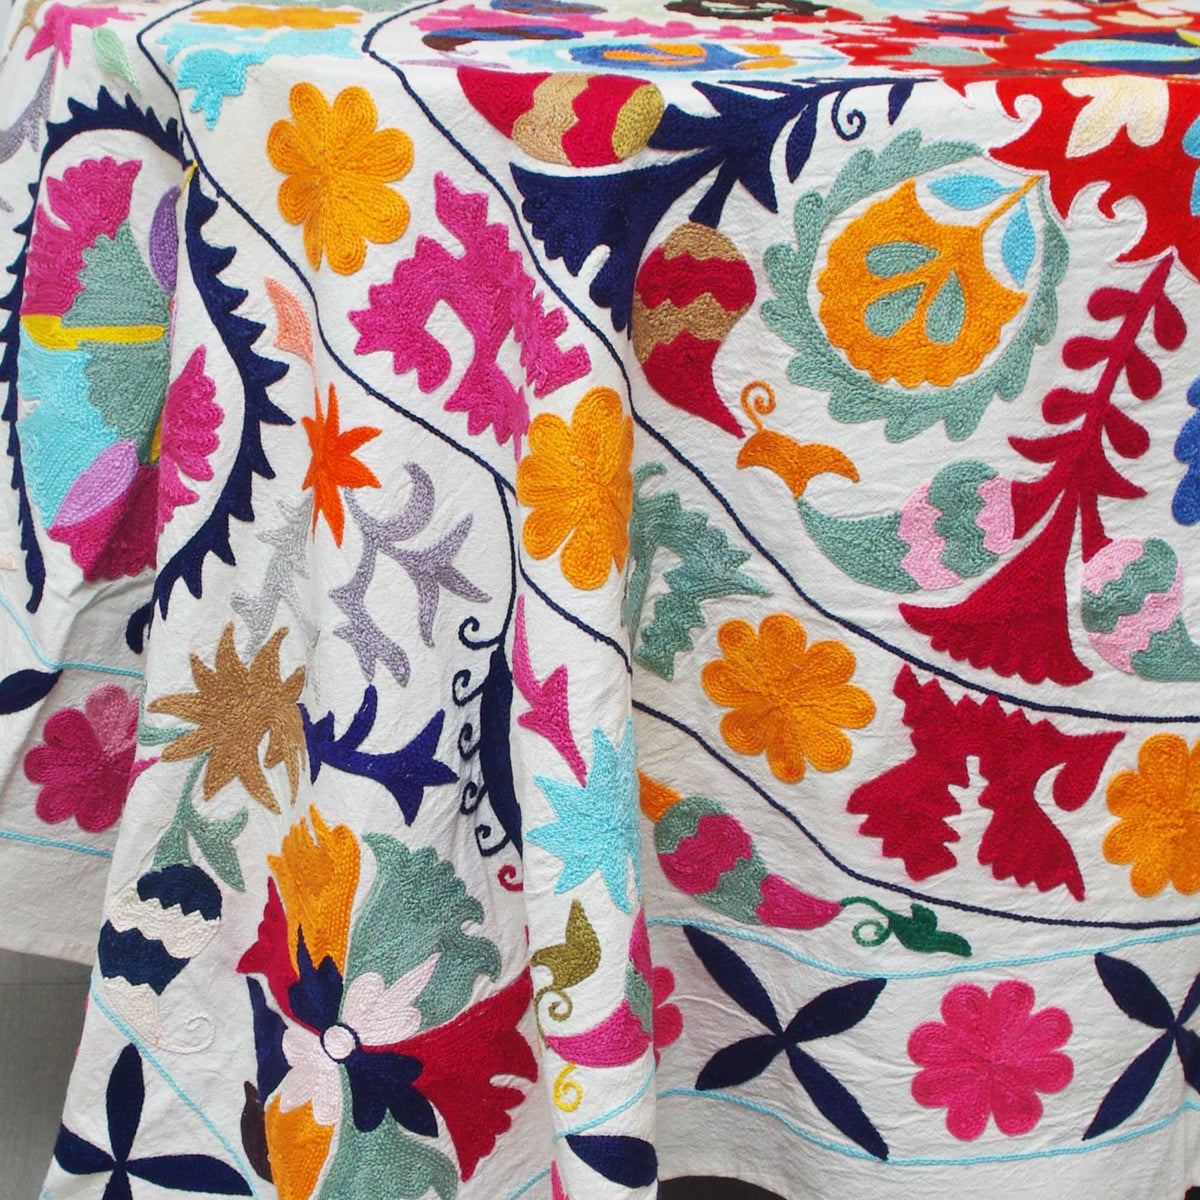 Uzbek Suzani Bedspread With Embroidery - Scarlet Floral